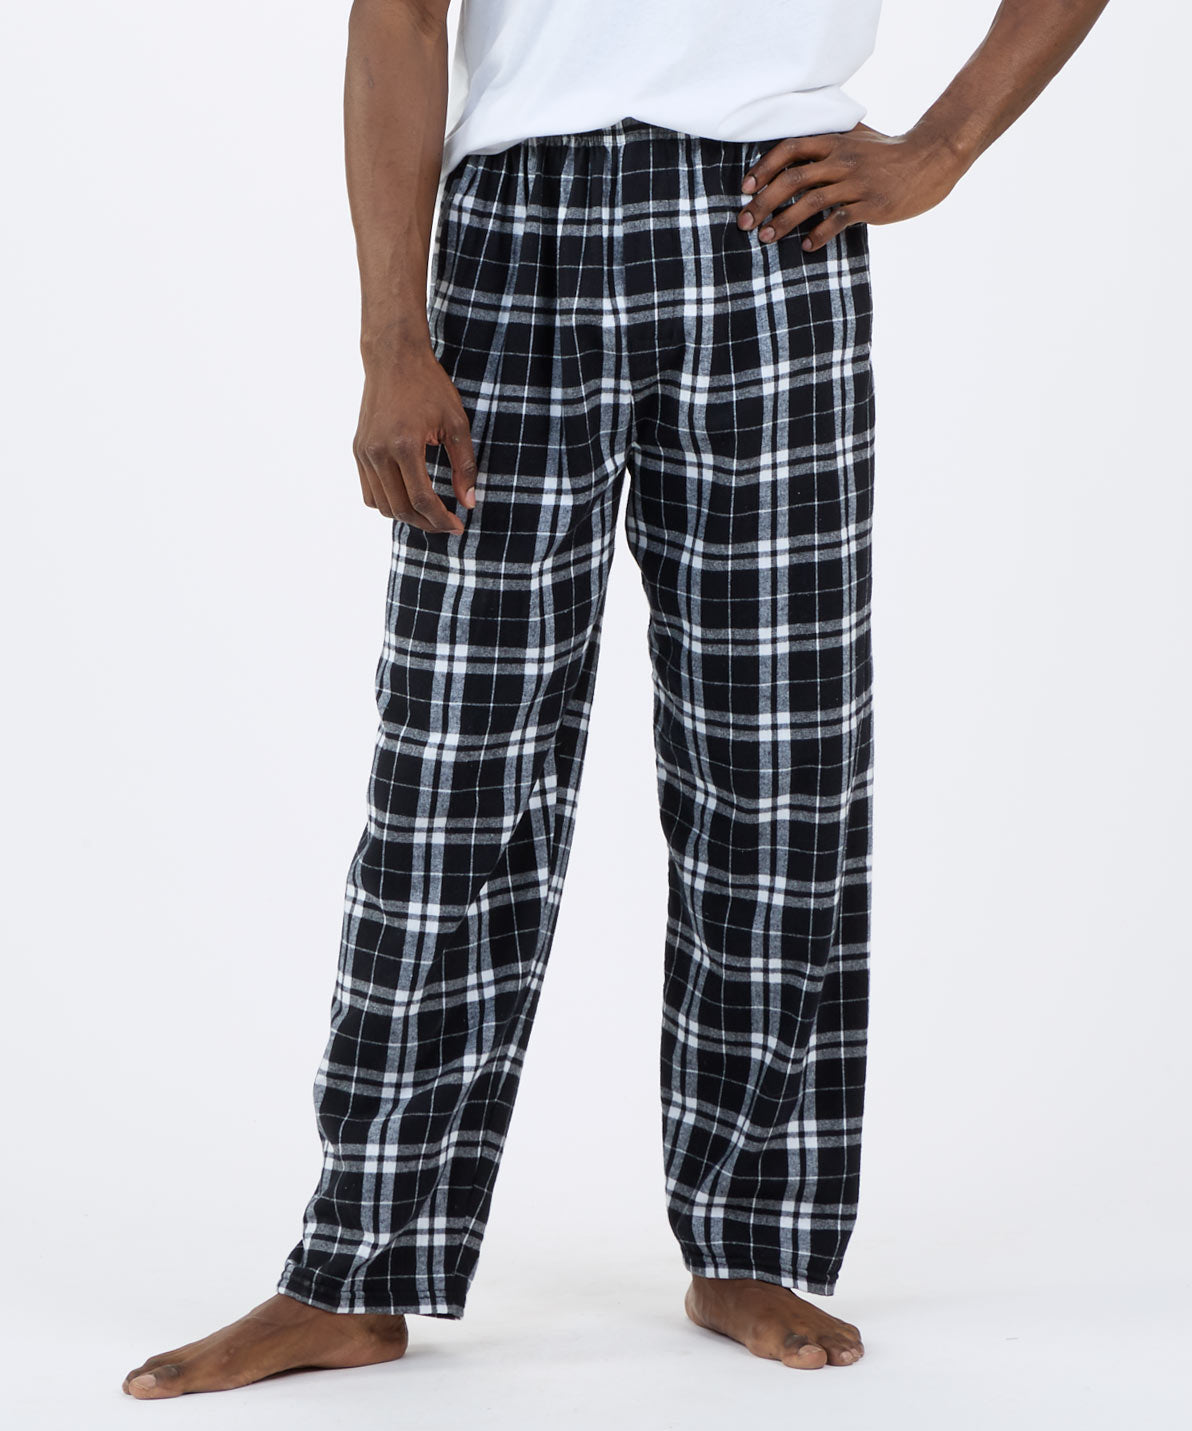 Boxercraft Men's Harley Natural Indigo Metro Plaid Flannel Pajama Pant